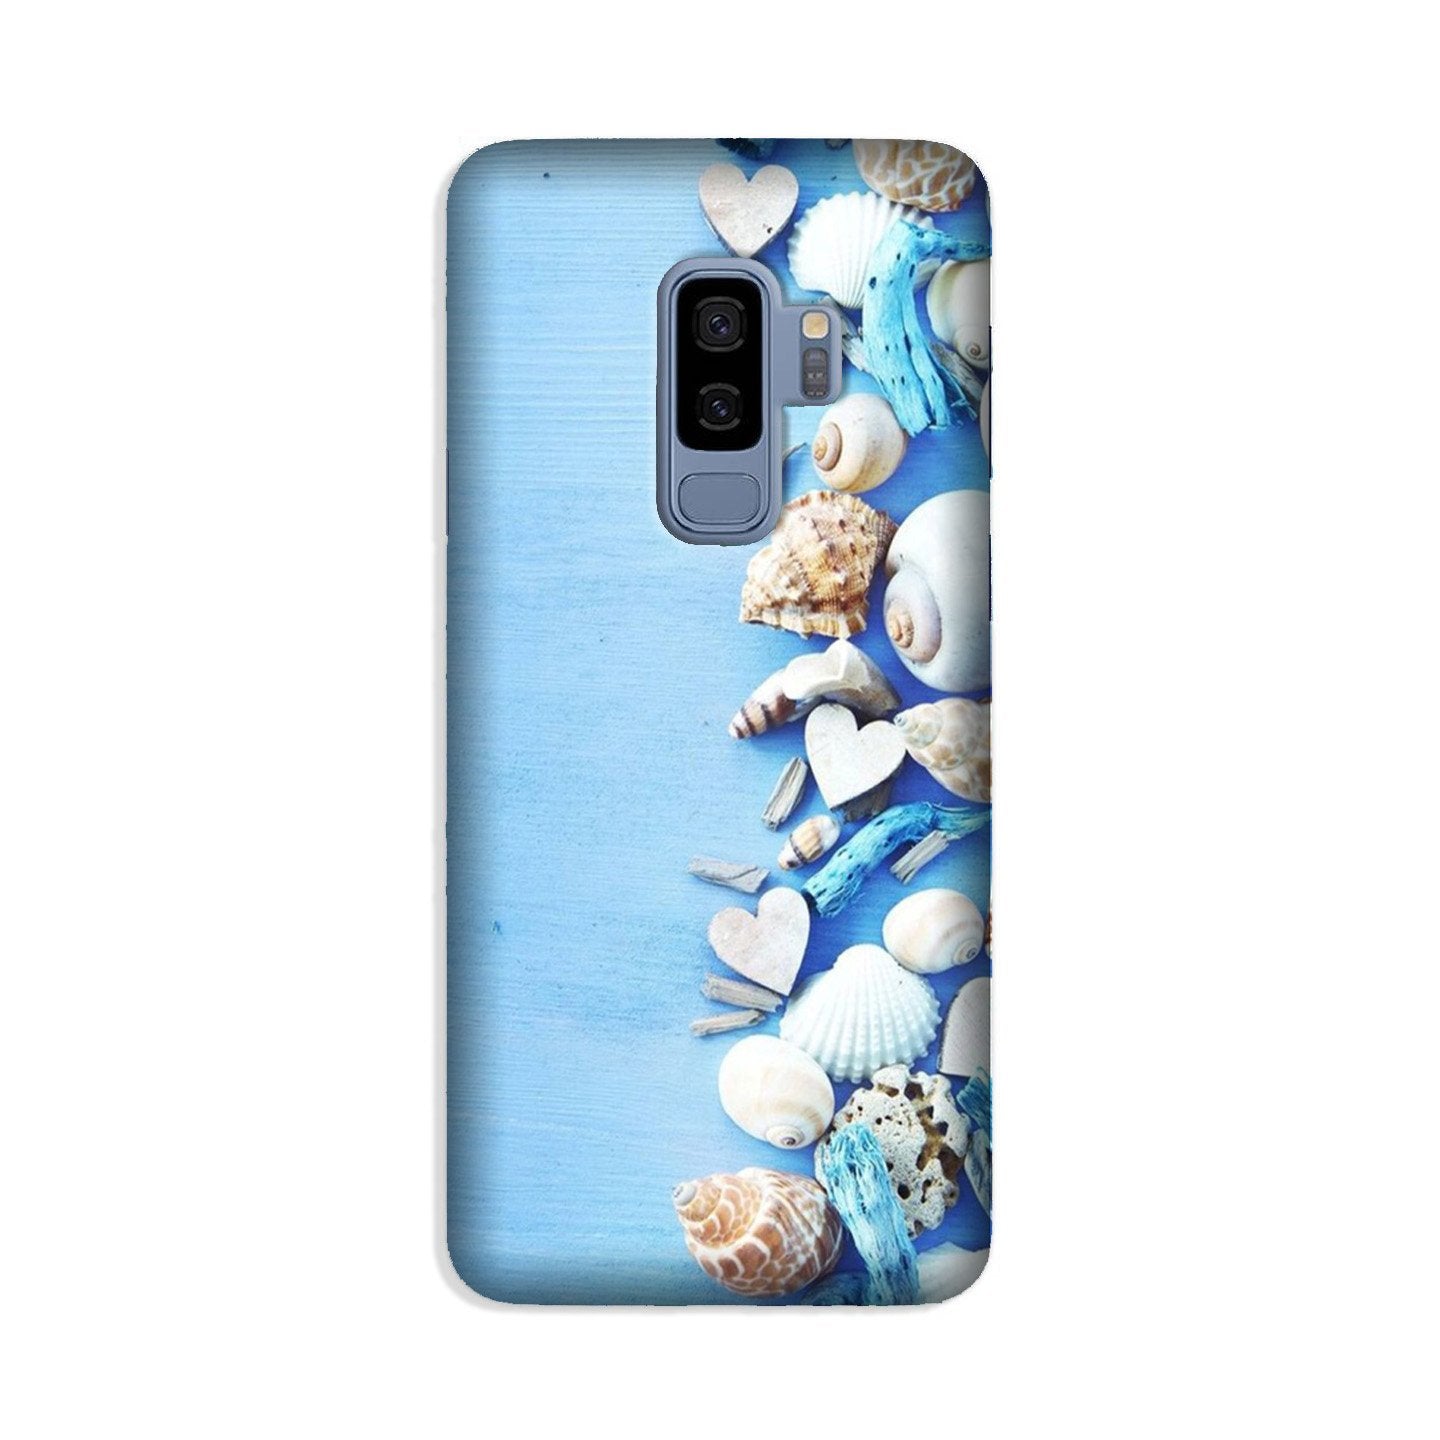 Sea Shells2 Case for Galaxy S9 Plus